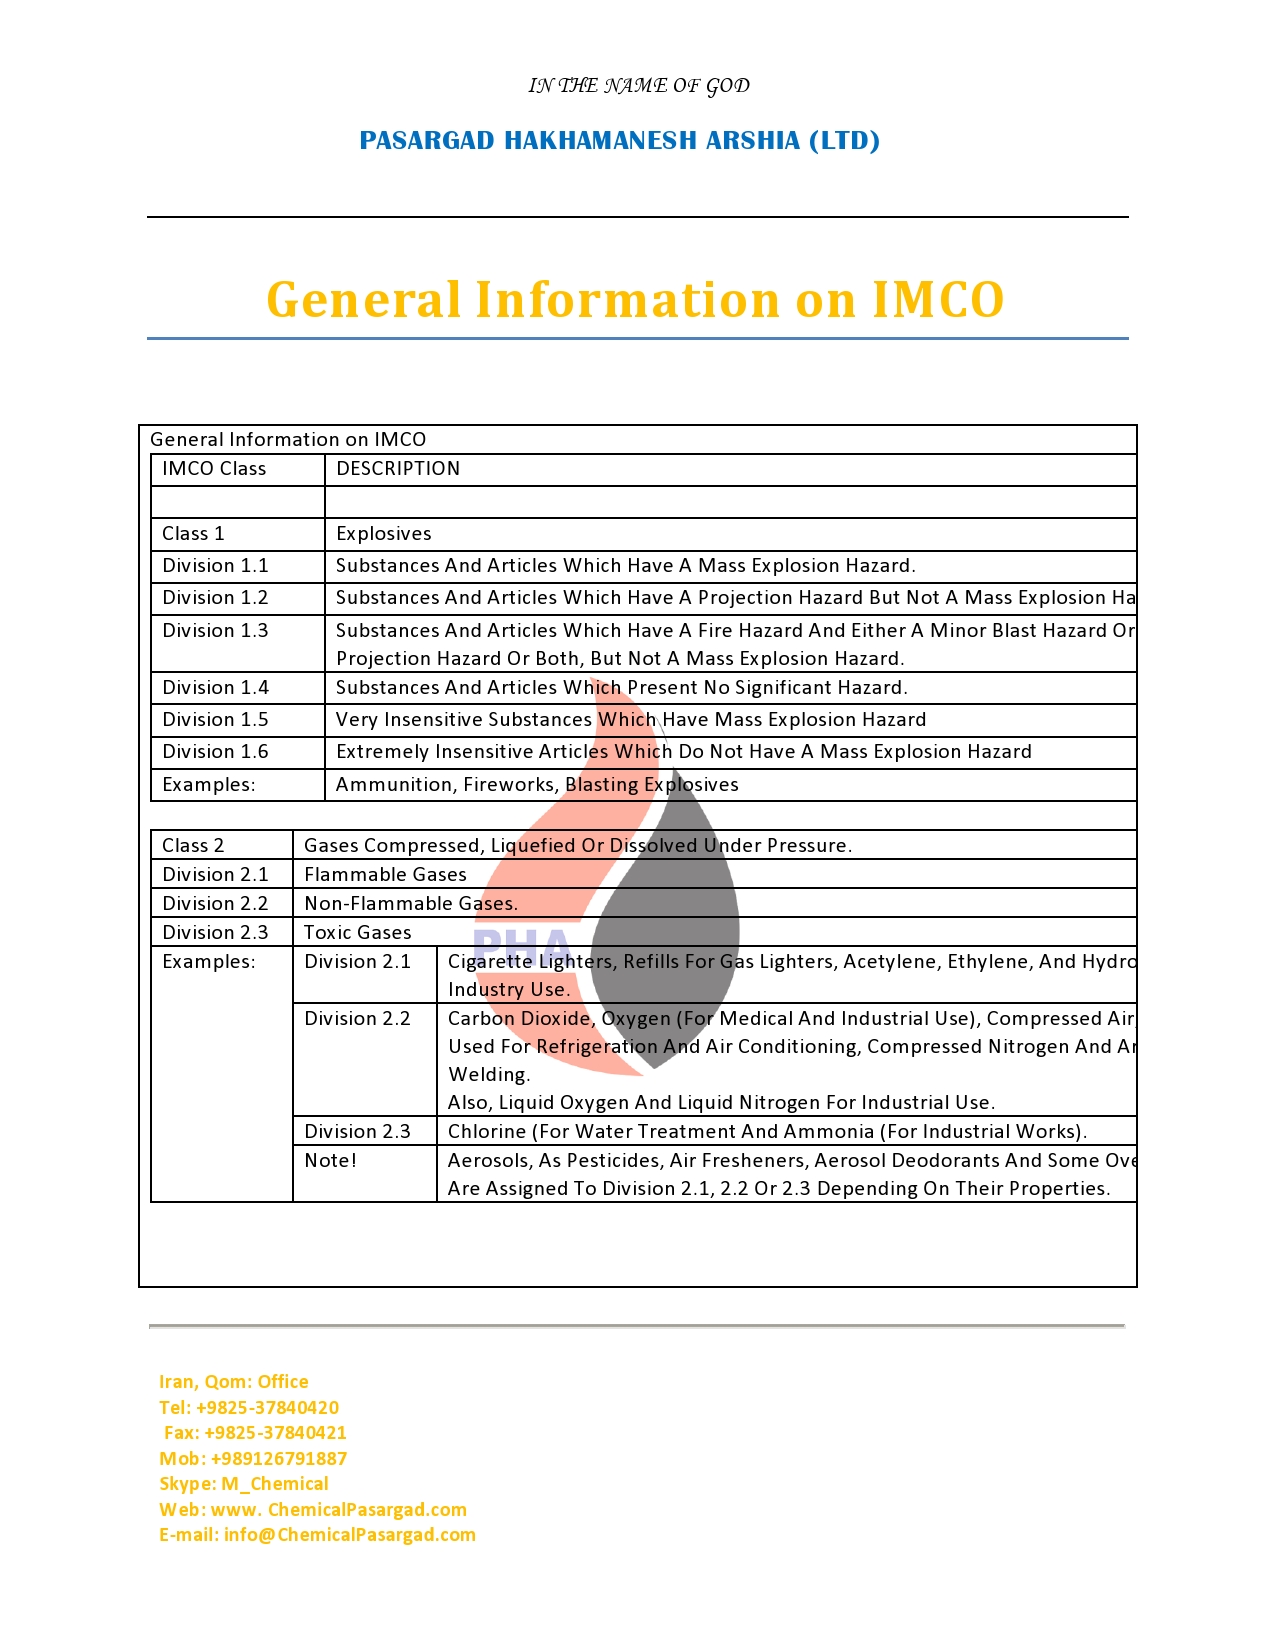 General Information on IMCO 